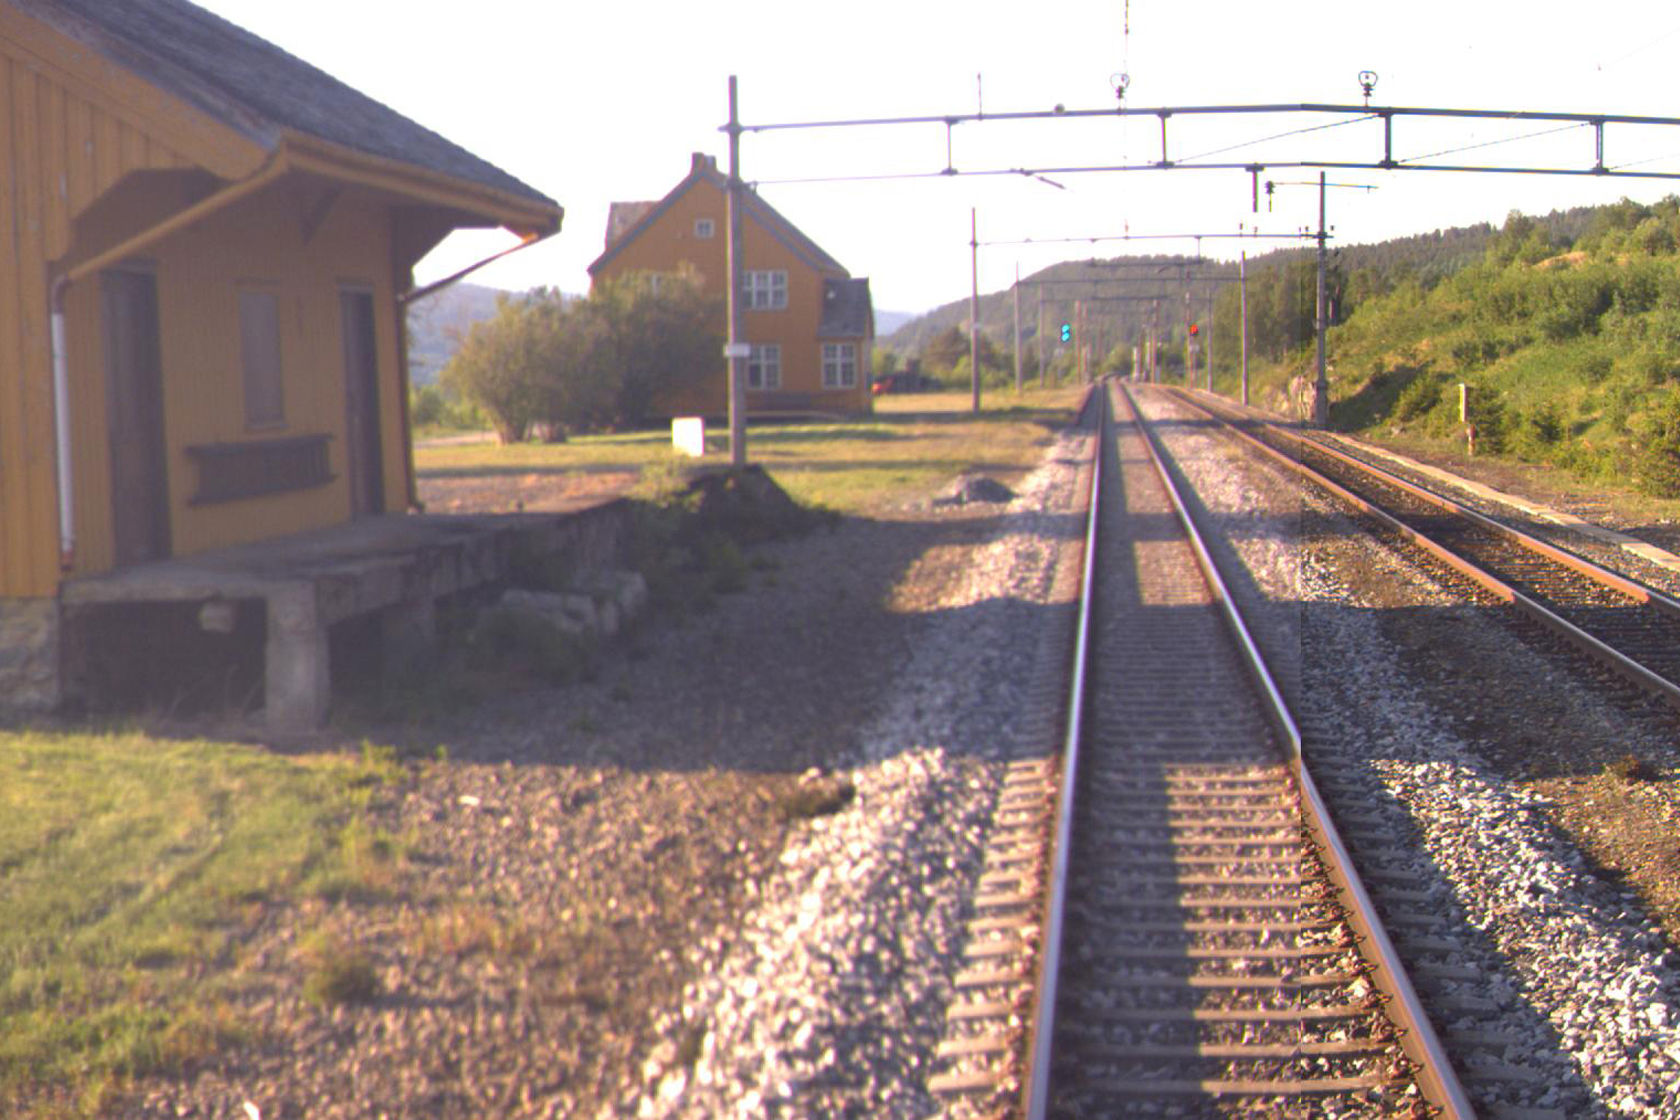 Tracks and building at Ulsberg station